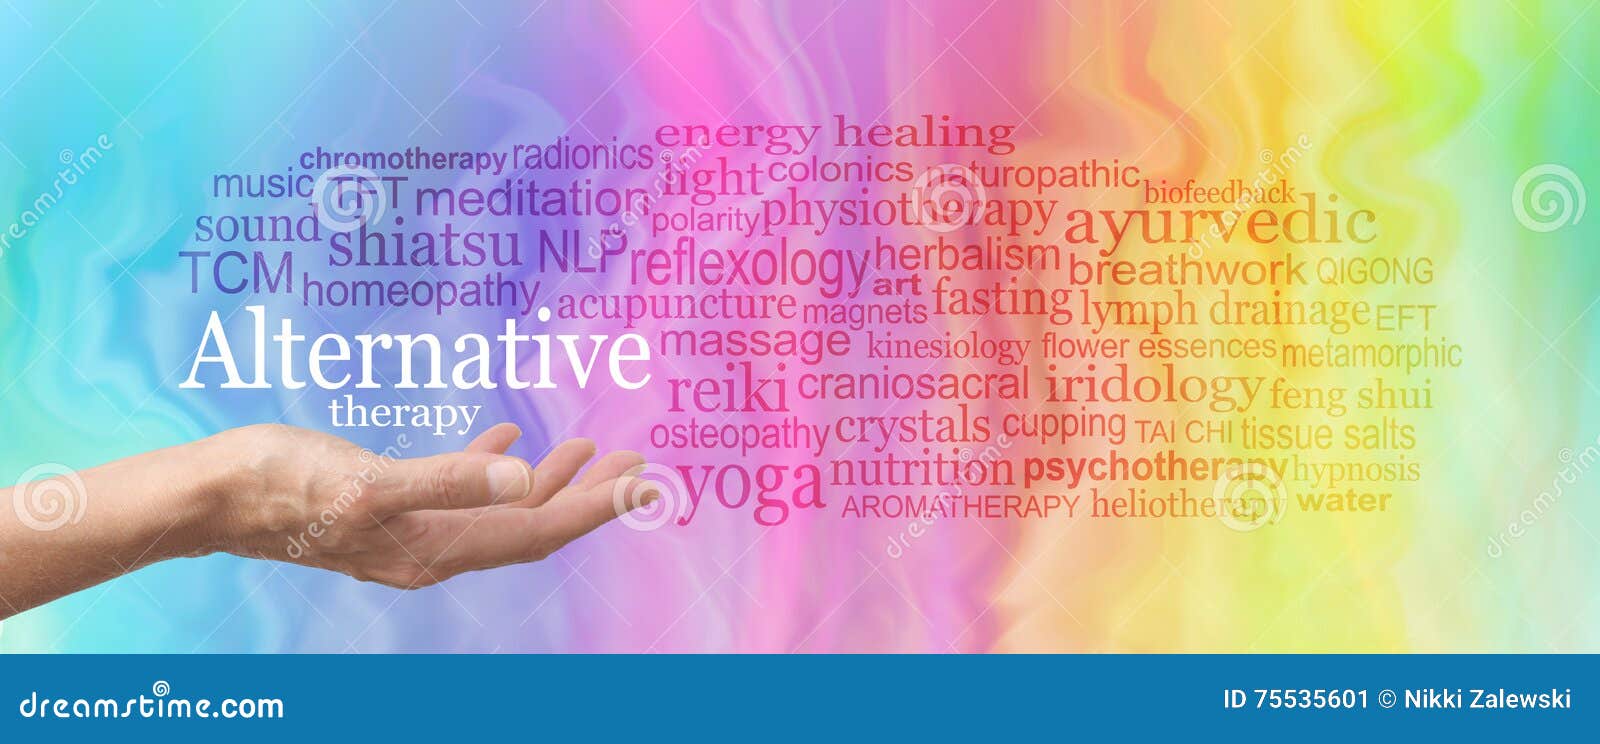 How Come Alternative Medicine Healthy For You? 1